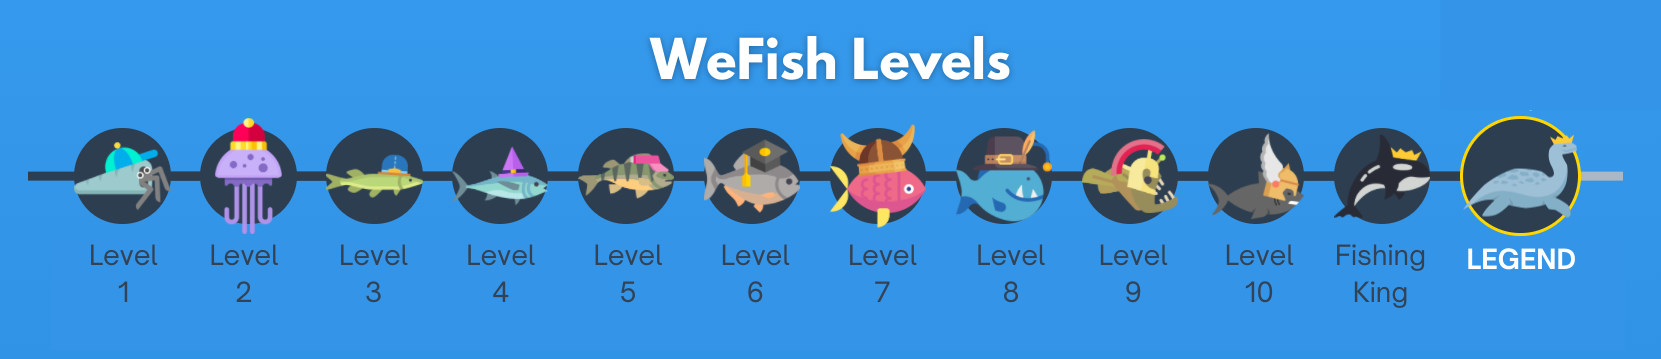 Niveles WeFish